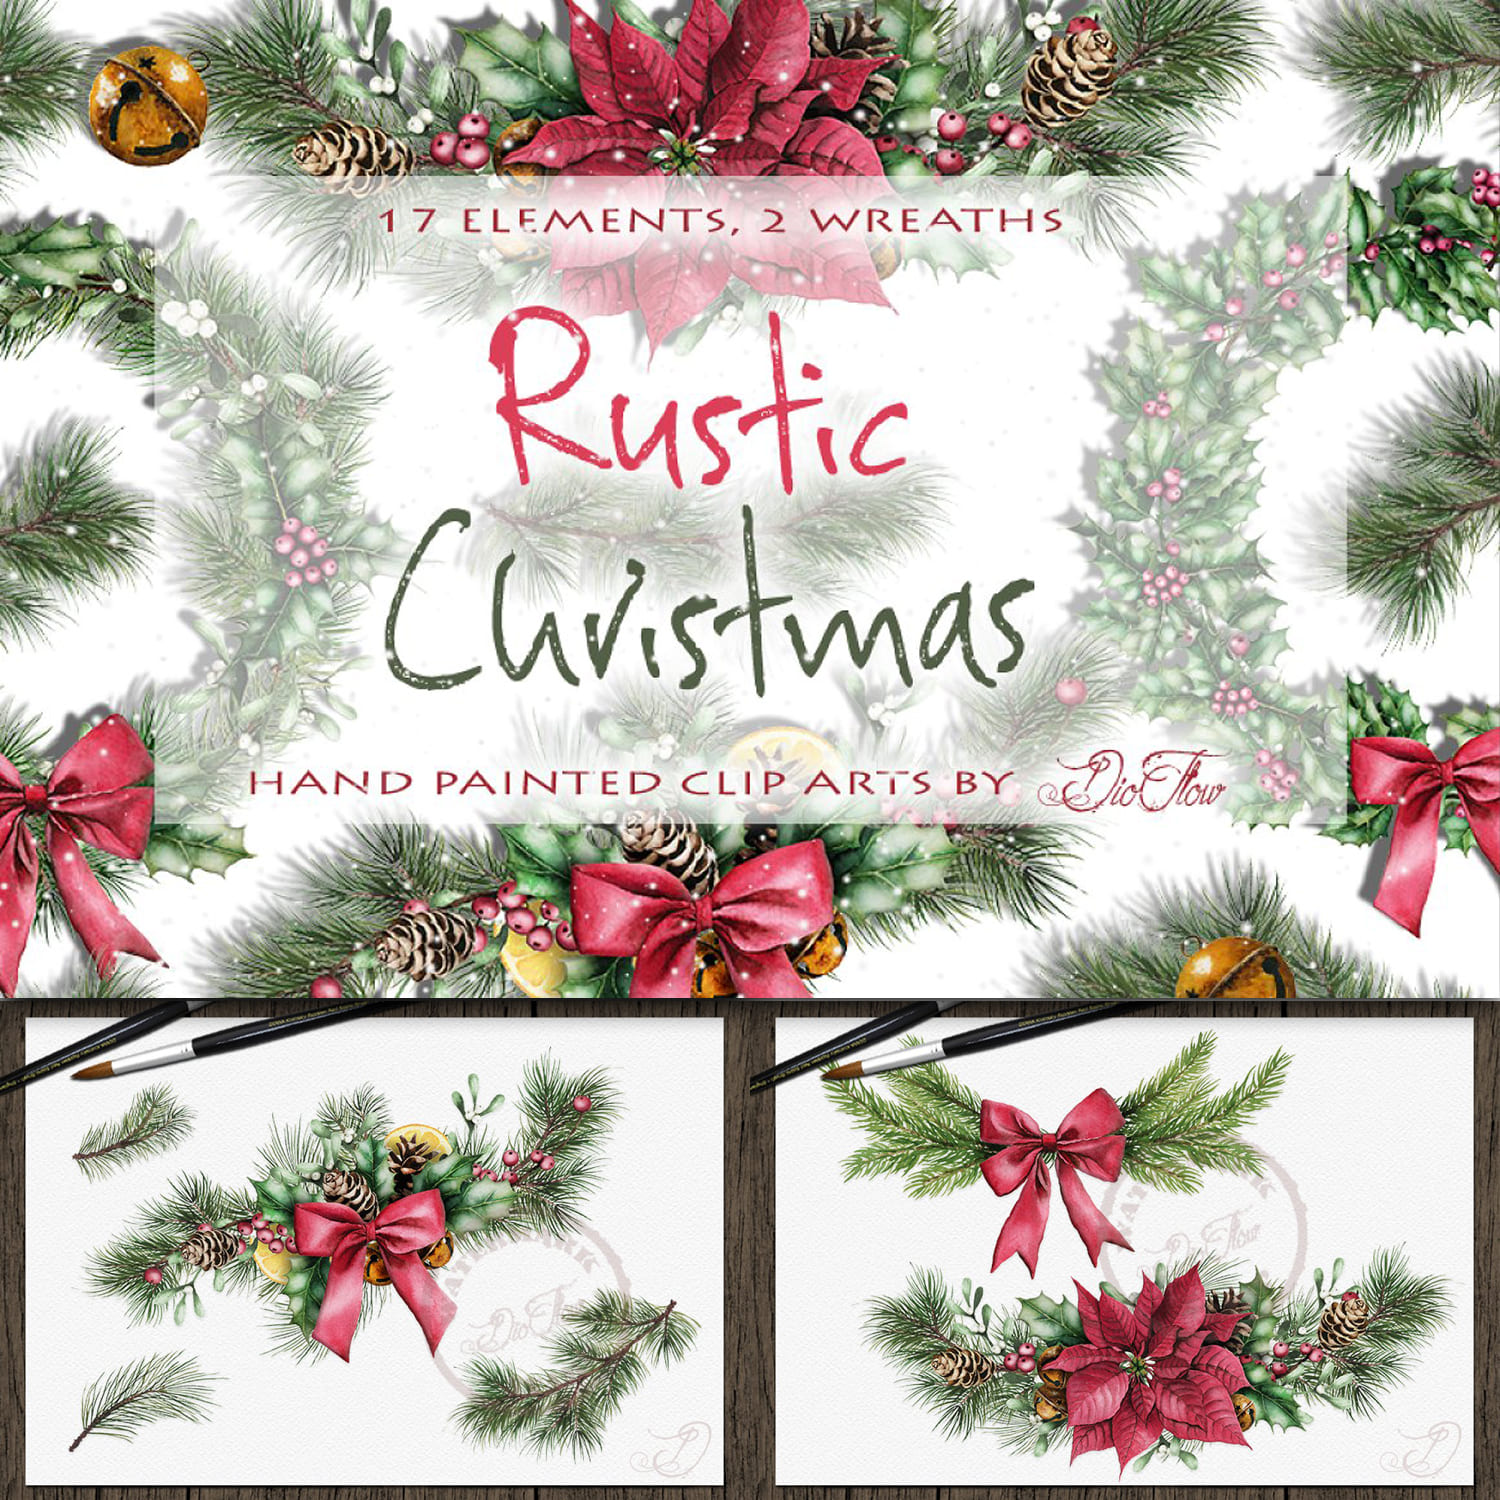 Rustic Christmas Watercolor Clip Art cover.